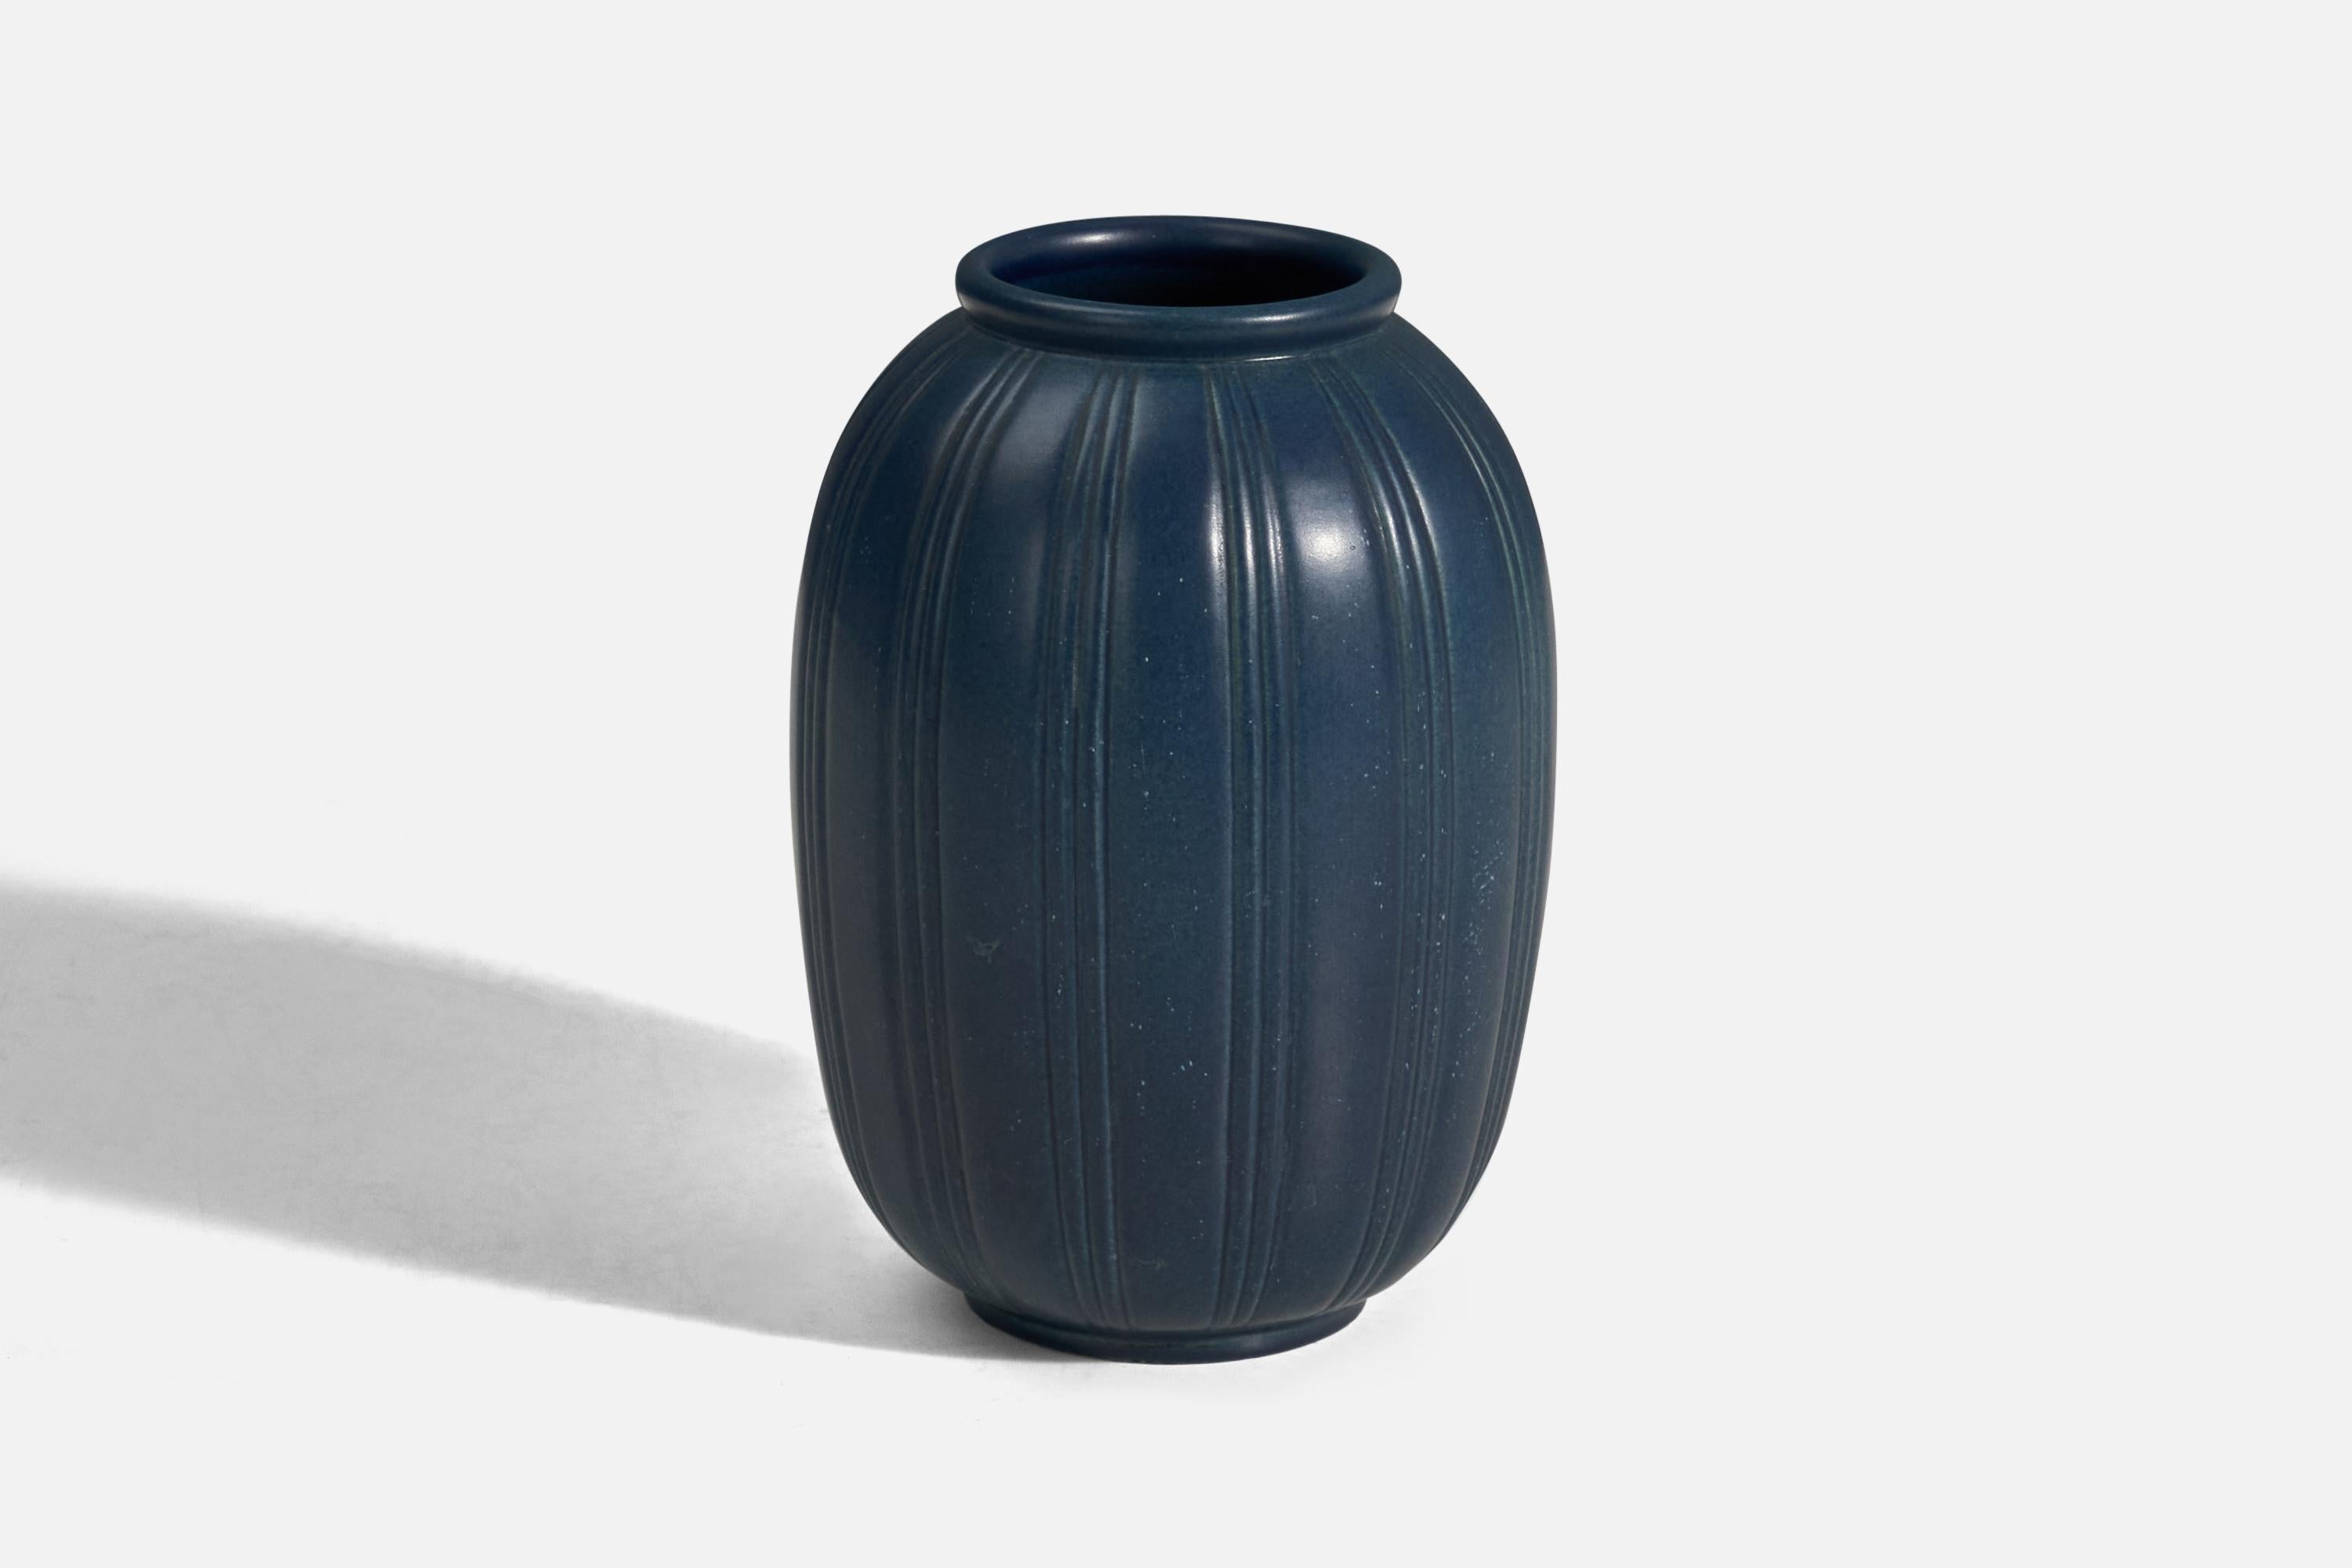 A blue glazed stoneware vase designed and produced by Peter Ipsen Enke, Denmark, 1940s.